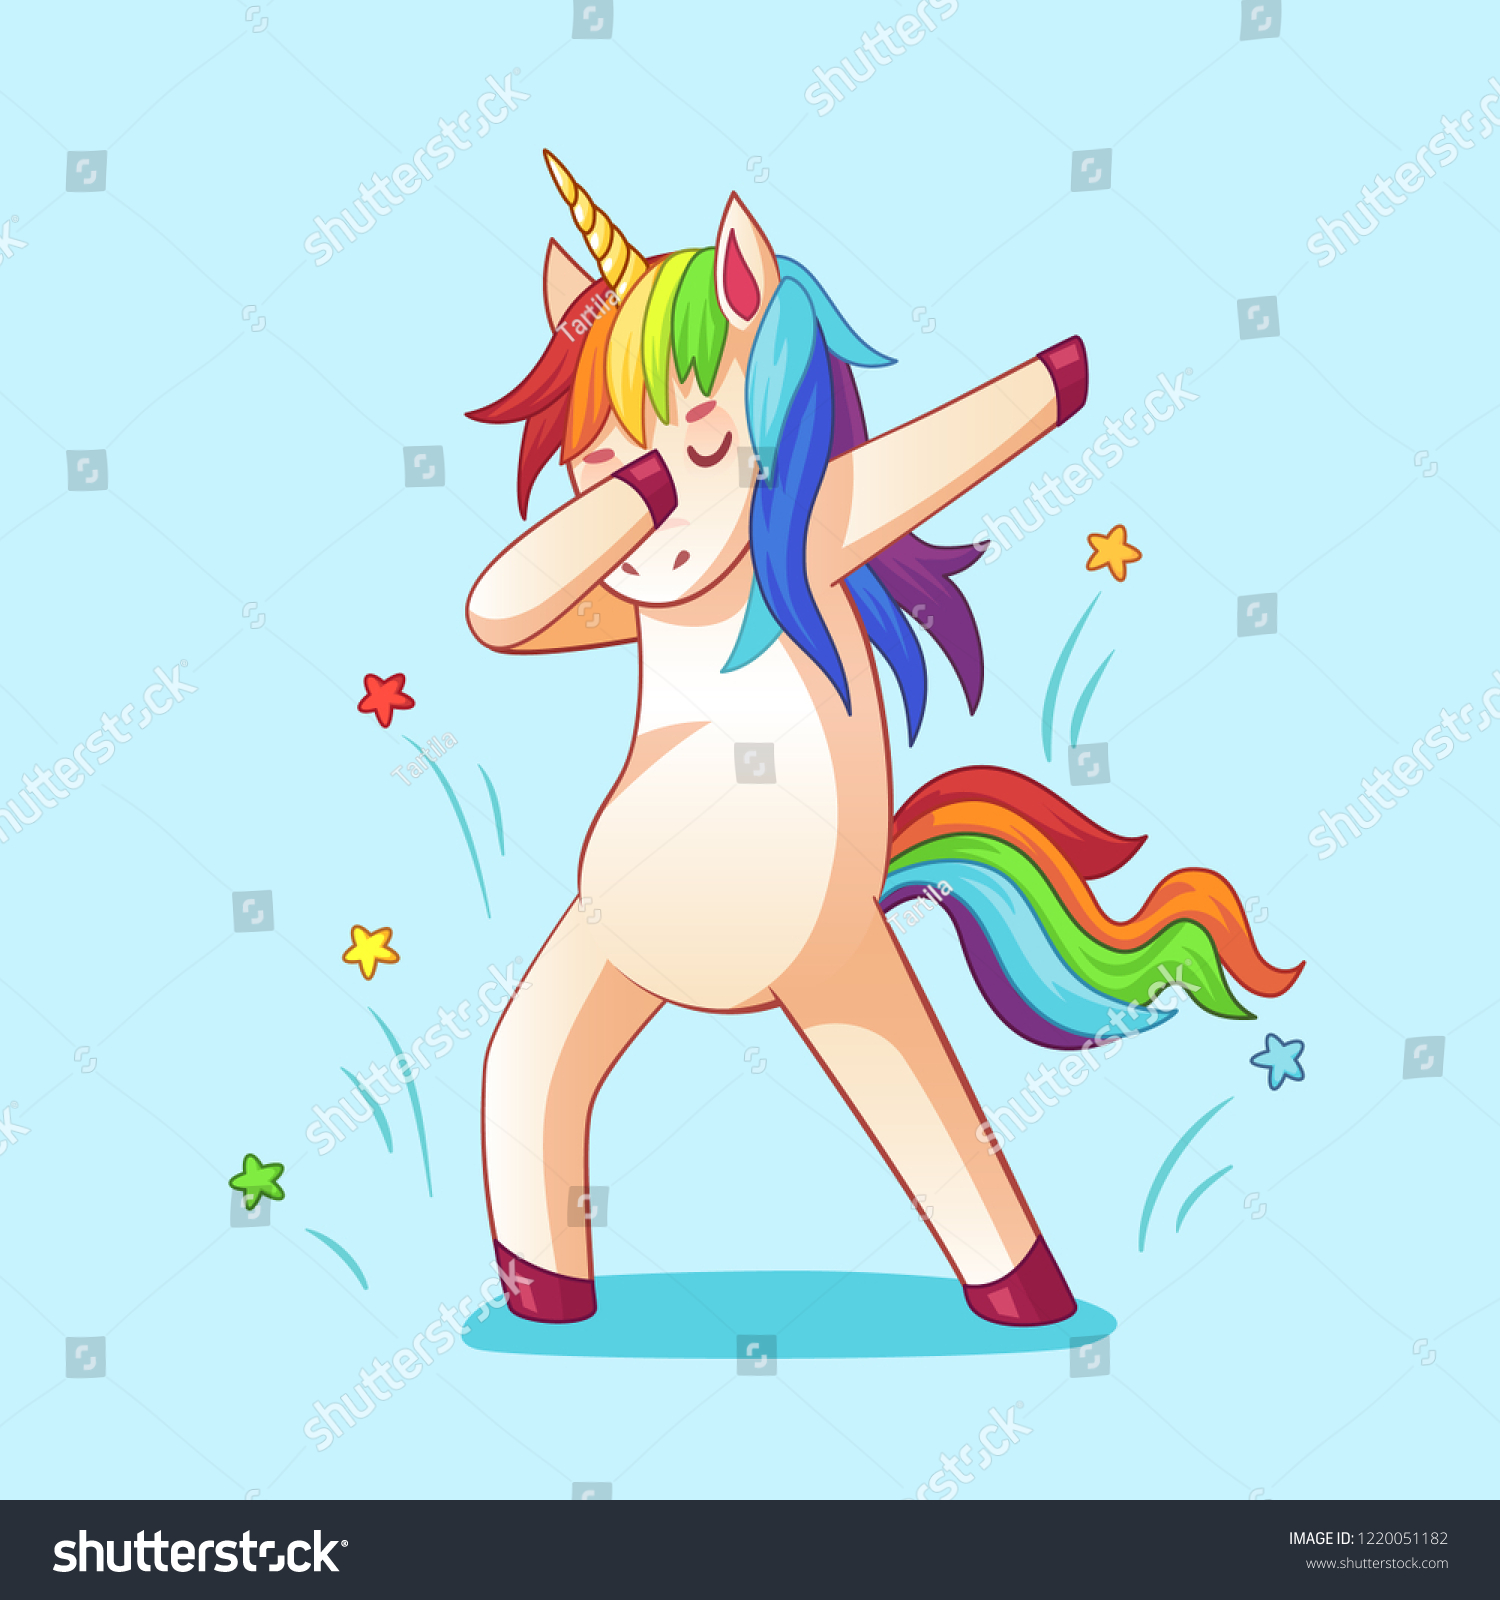 SVG of Dabbing unicorn. Dab dancing meme pose, dreamy horse in cool glasses. Memes dance memes dreaming unicorn character, happy smiling fantasy magic mythology cartoon vector illustration svg